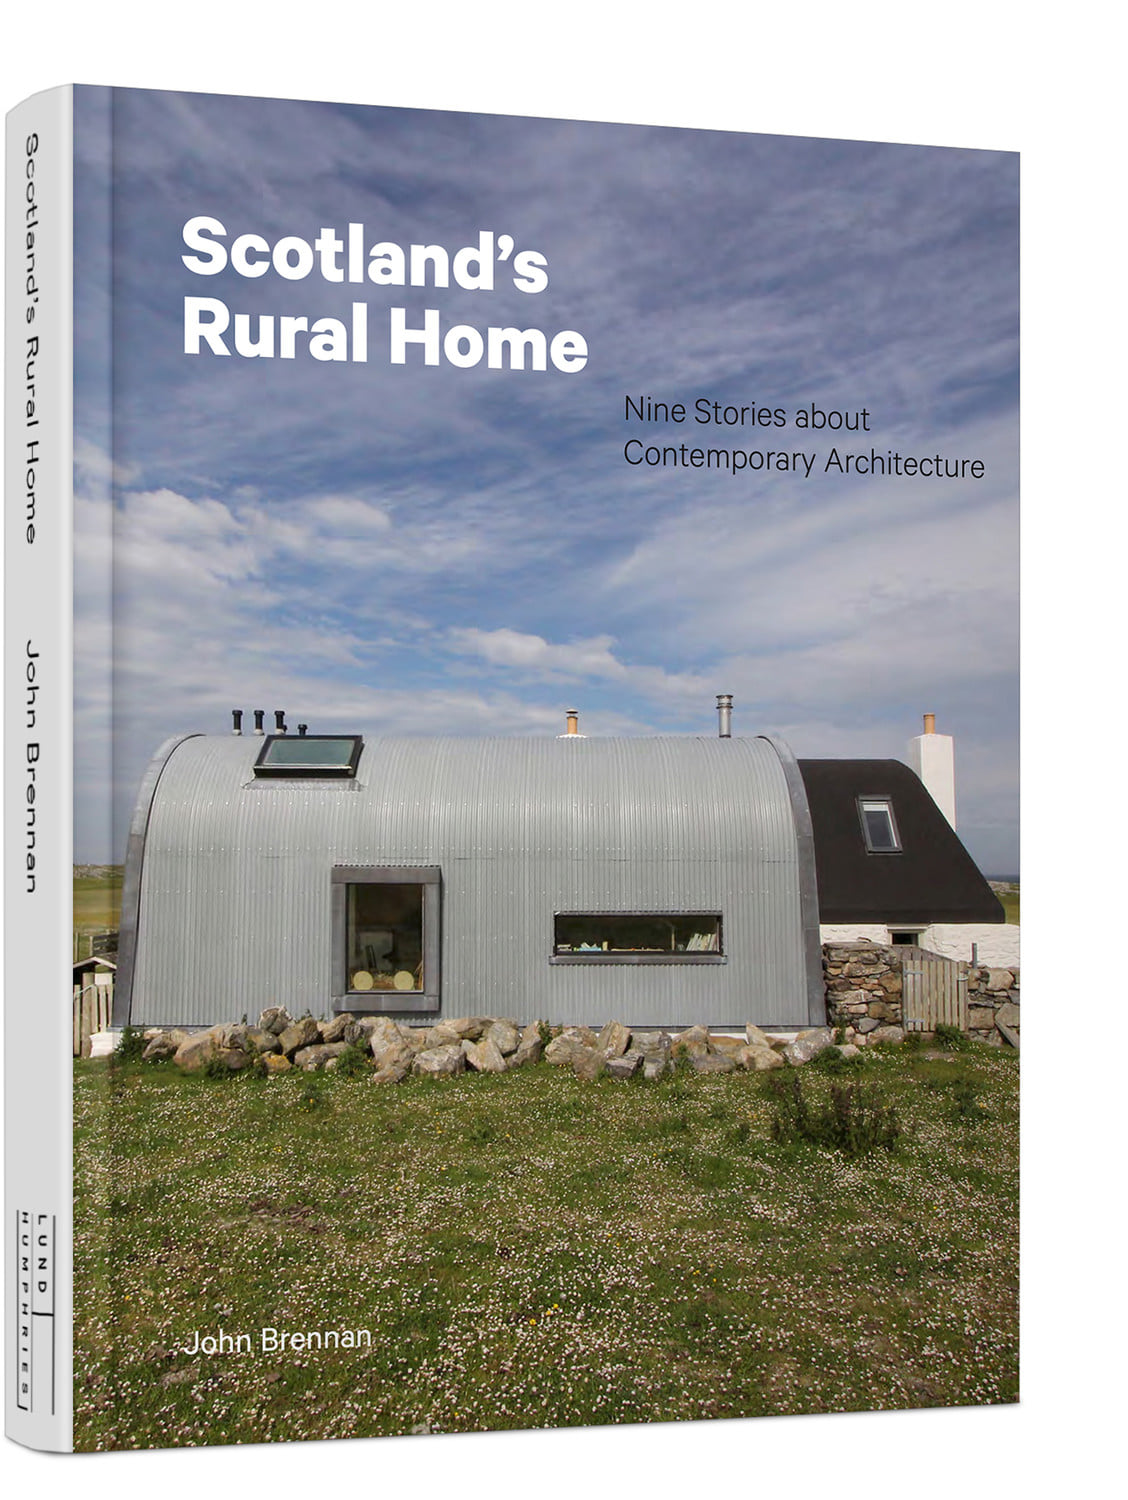 Scotland's Rural Home (Book)